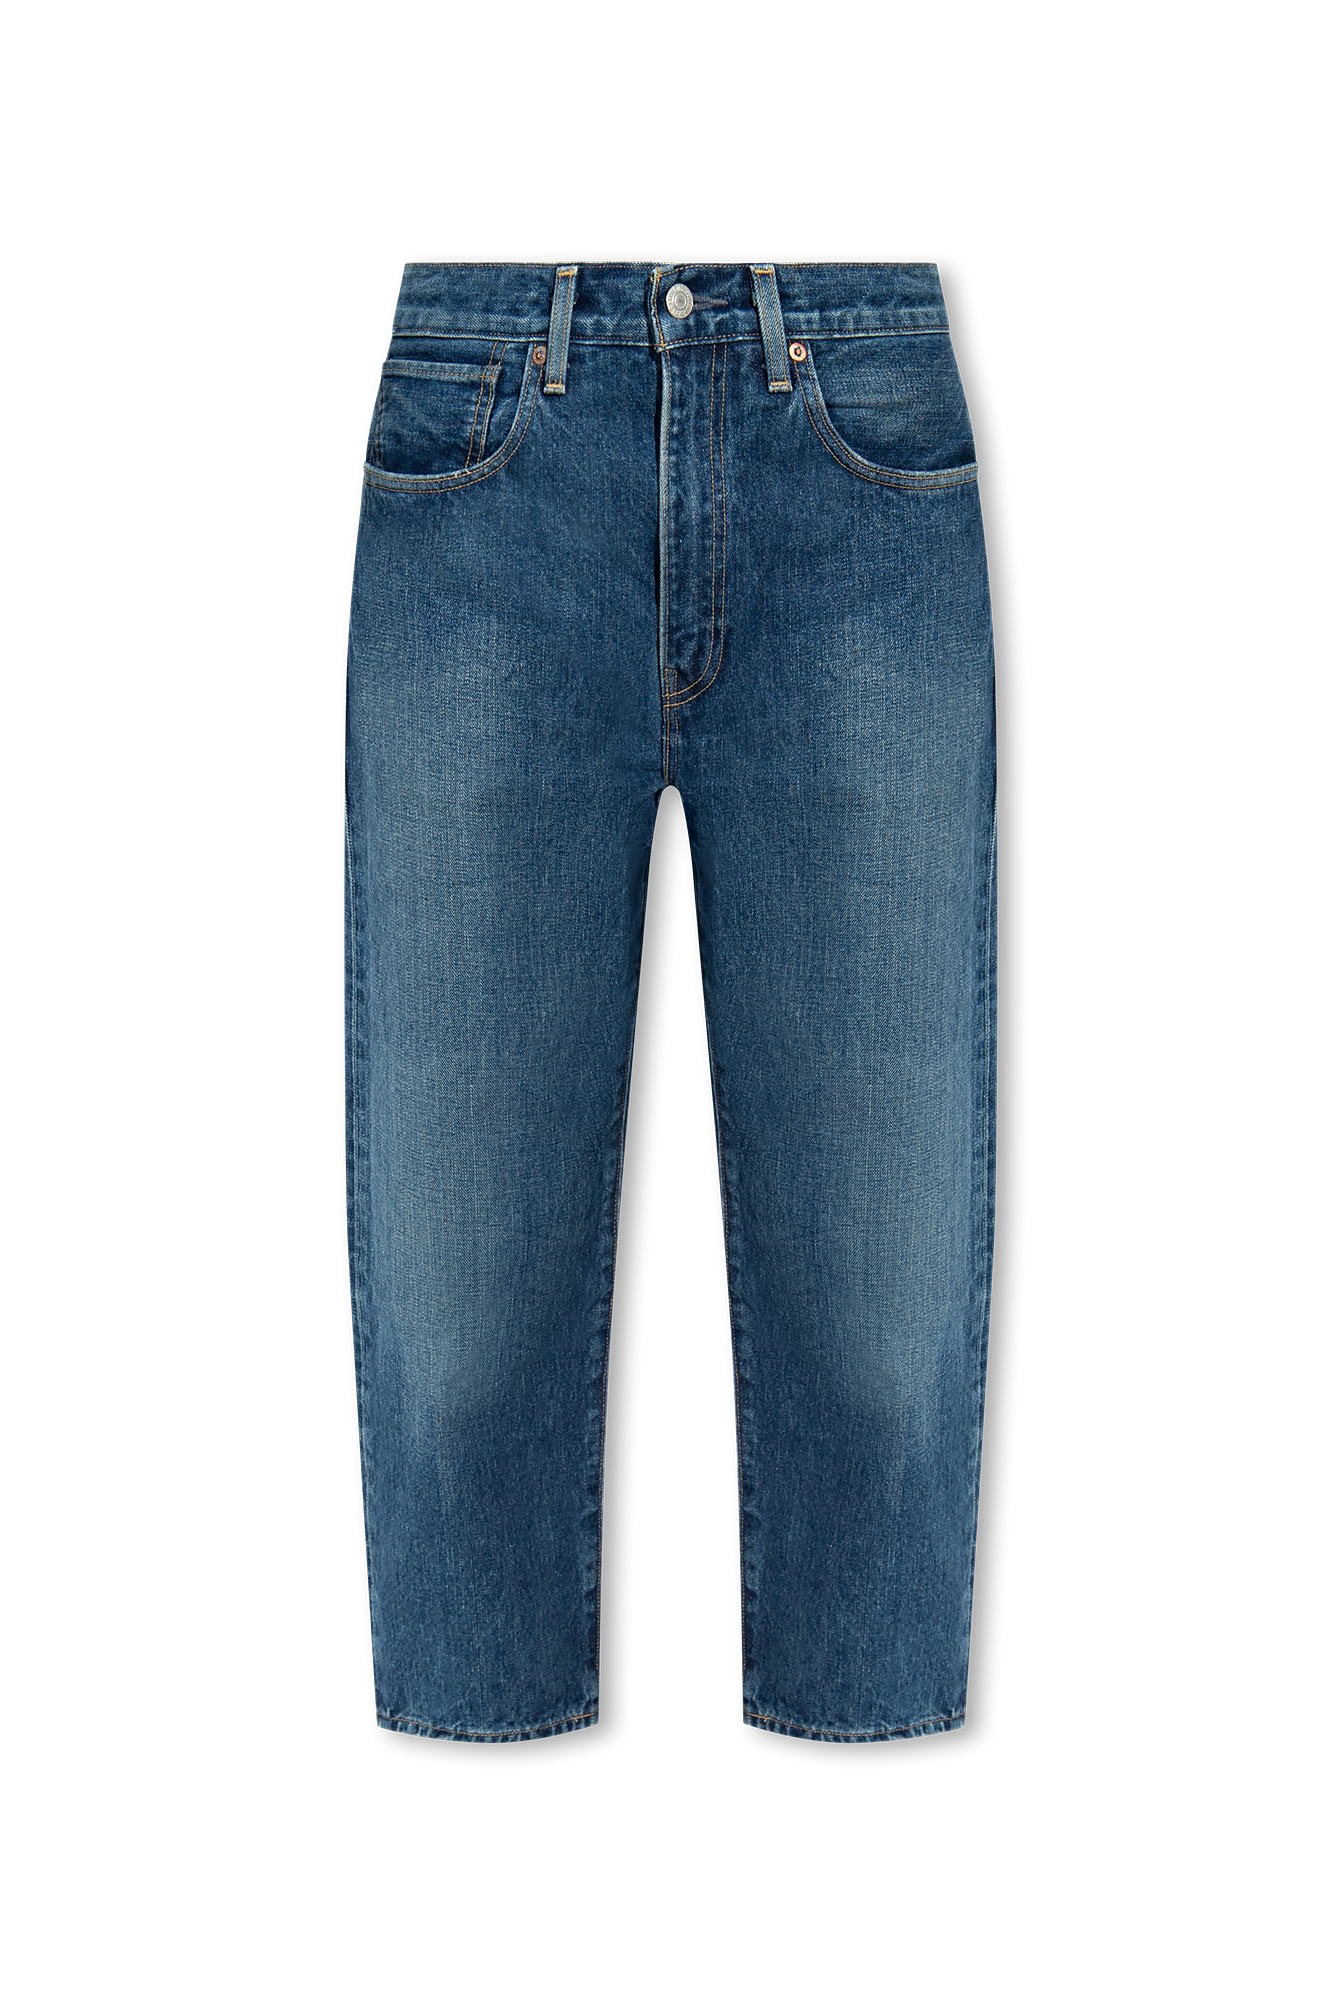 Pleated navy blue pant, Michael Michael Kors, Shop Women%u2019s Skinny  Pants Online in Canada